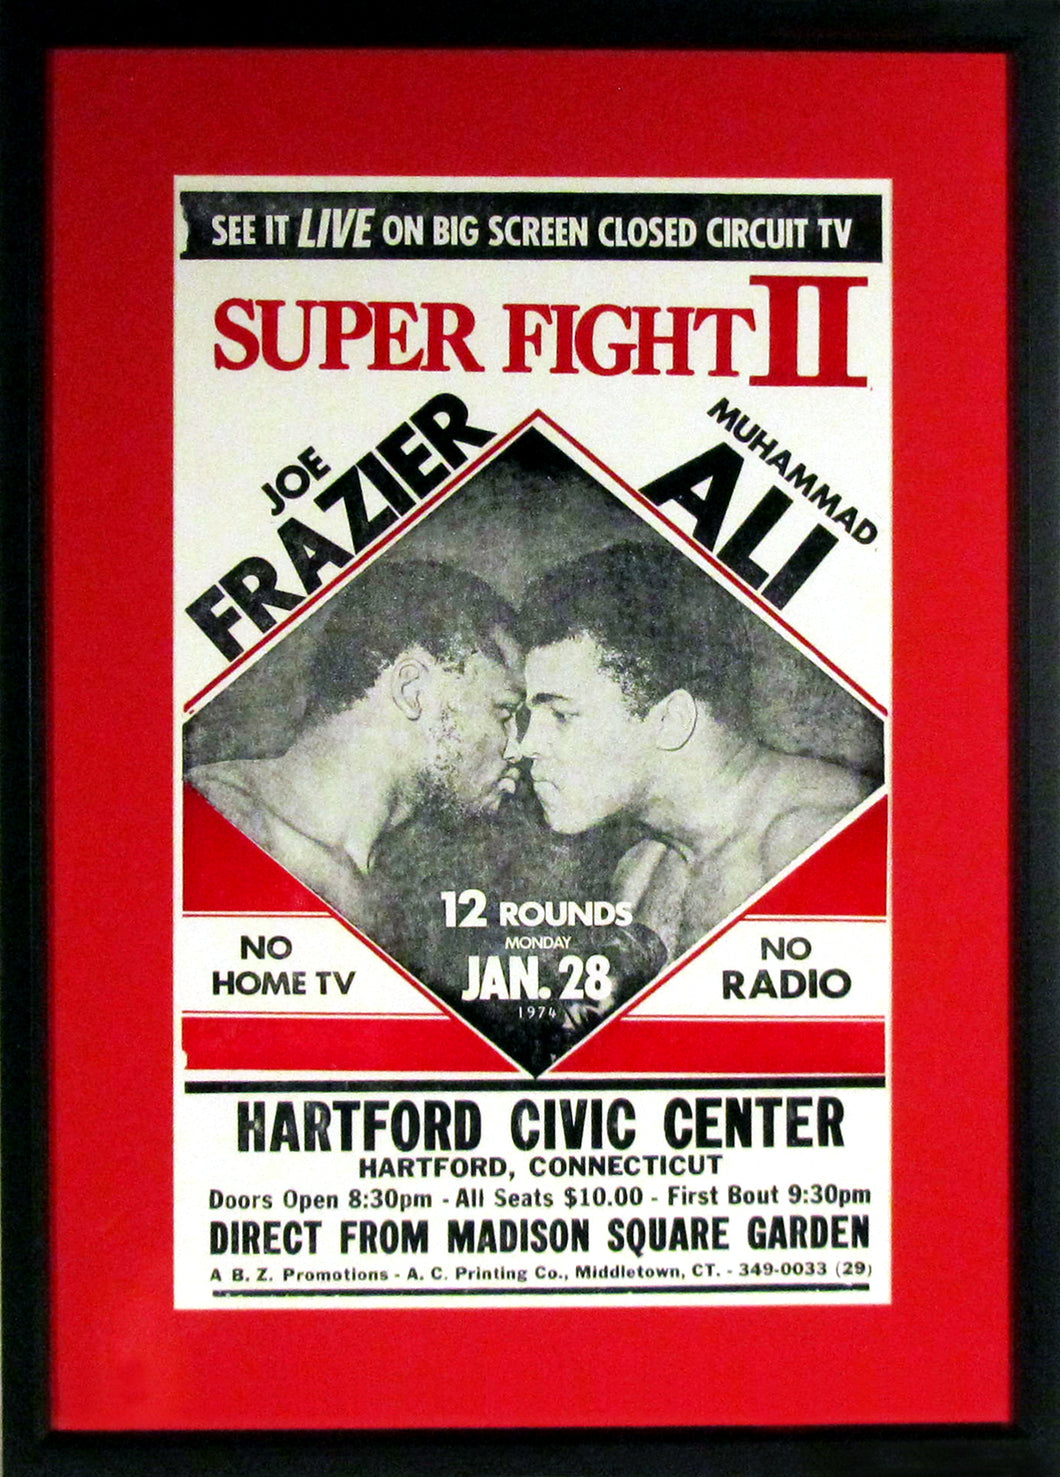 Muhammad Ali vs. Joe Frazier Framed Poster (Engraved Series)